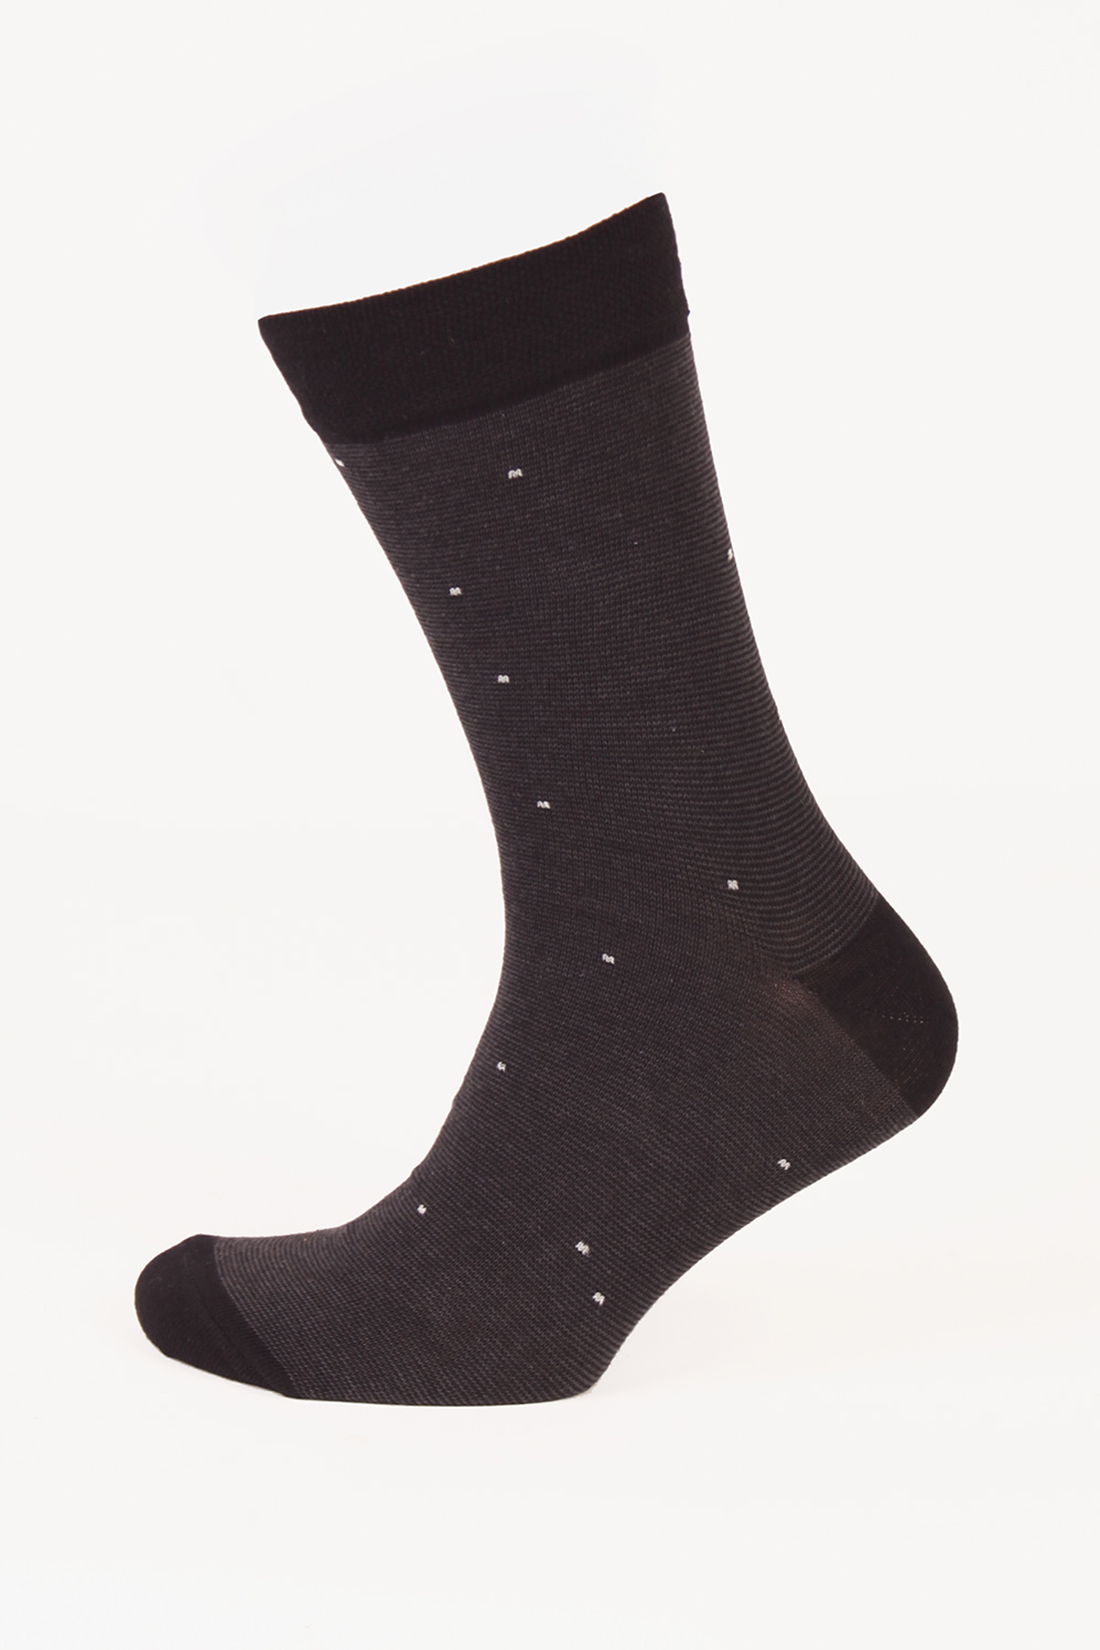 Мужские носки, 1 пара (арт. baon B891009), размер 43/45, цвет черный